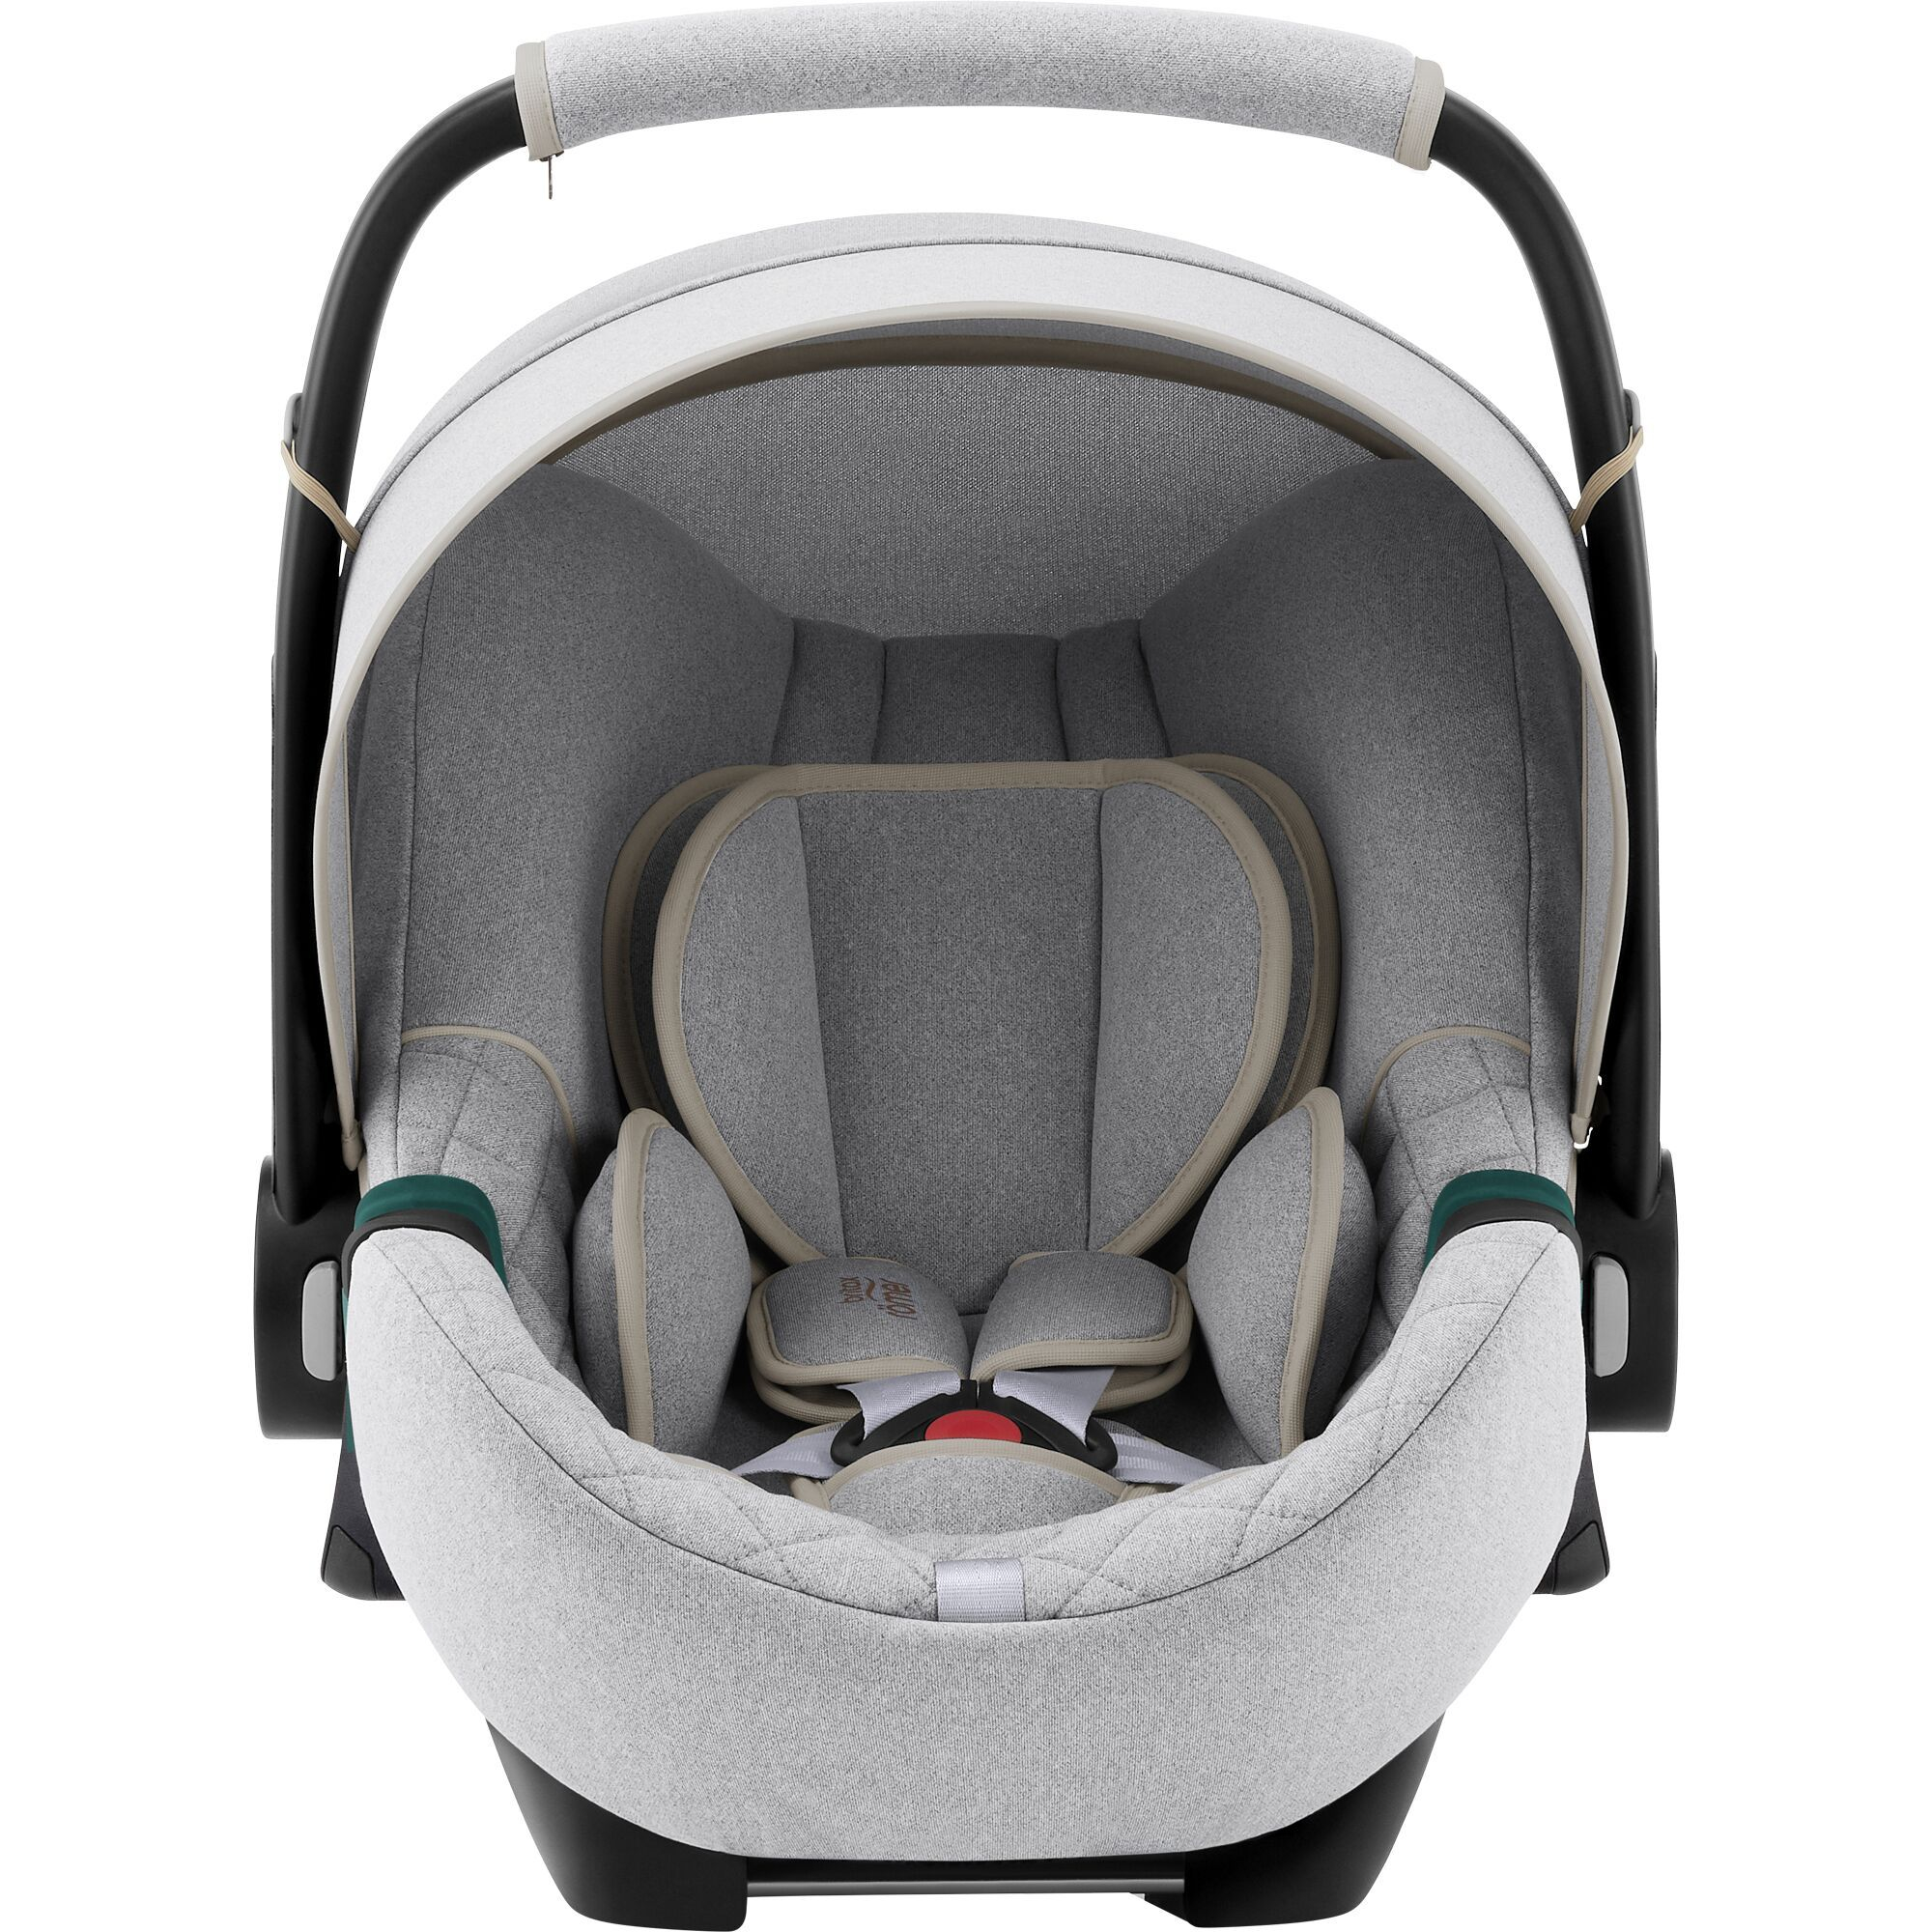 BRITAX-ROMER Baby-Safe 3 i-Size - Nordic Grey